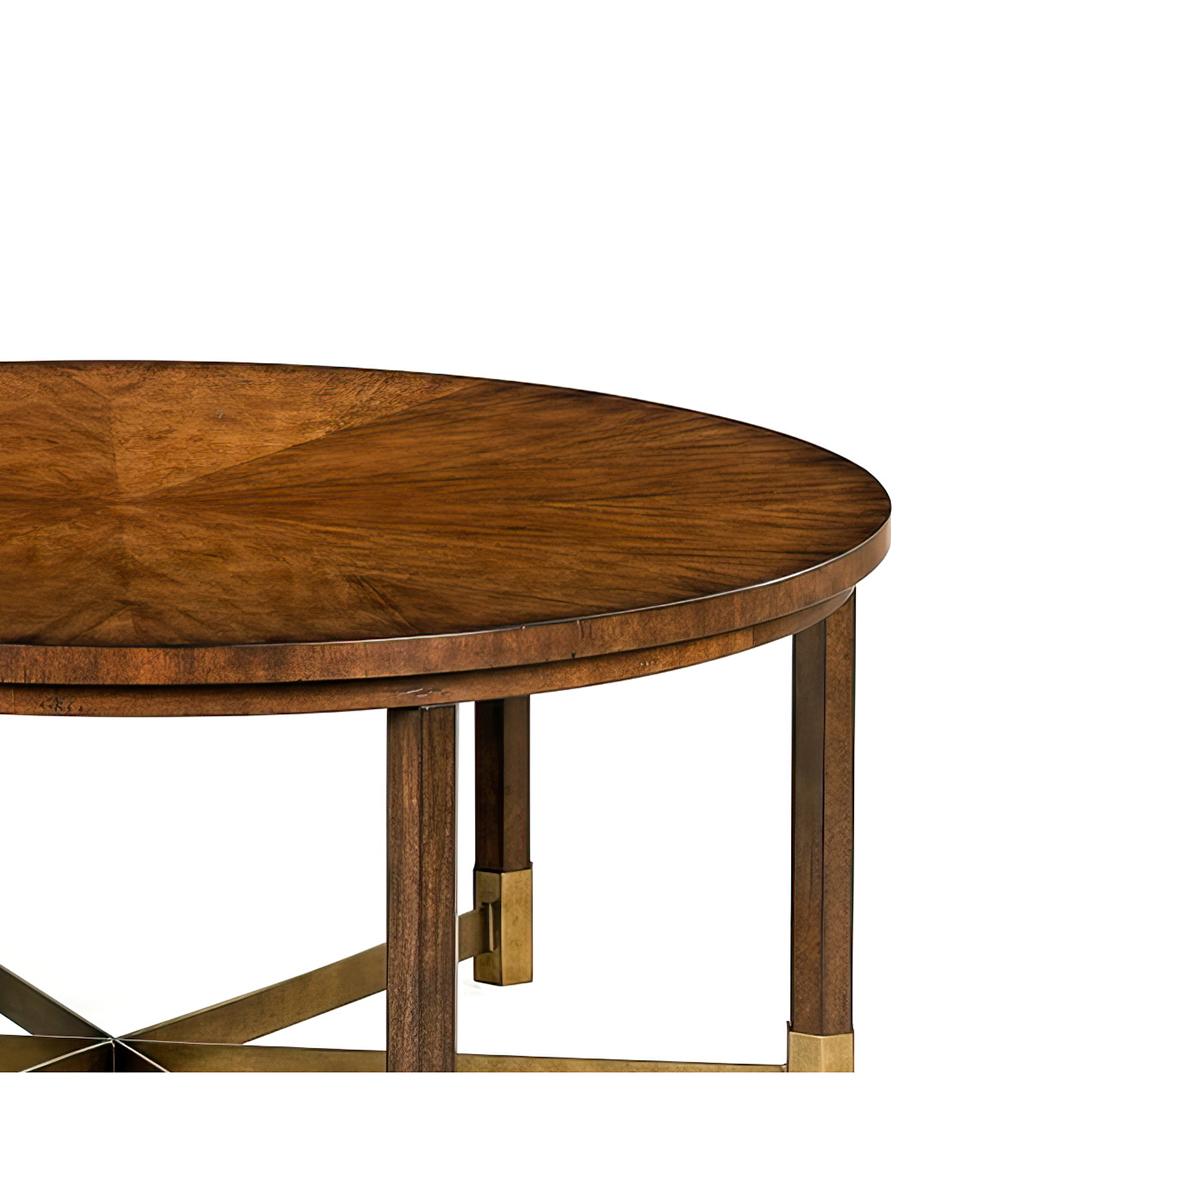 Moderne The Moderns Round Coffee Table (Table basse ronde moderne) en vente